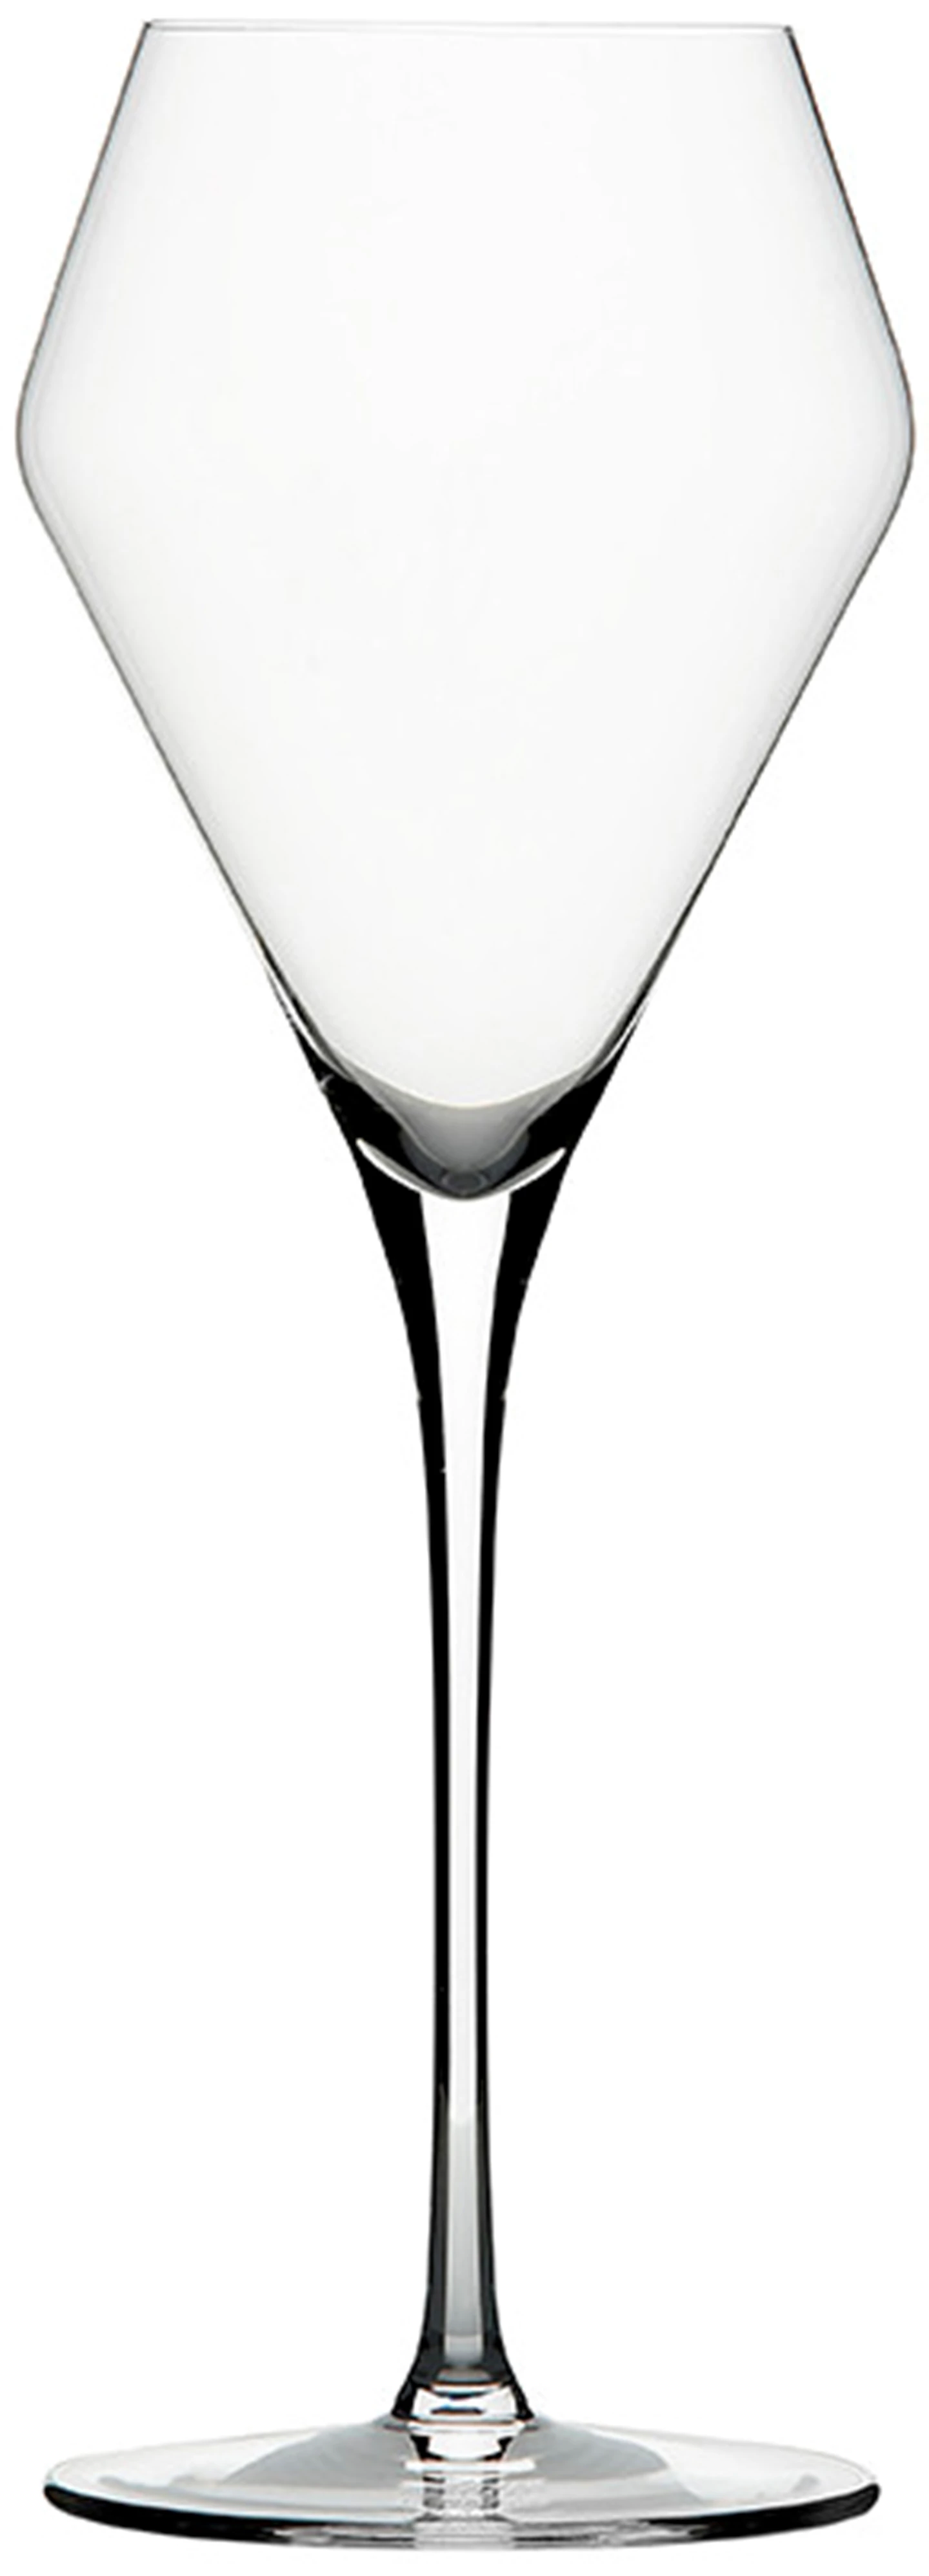 Løgismose Grej Zalto Glasperfektion Glas til søde vine  2 stk - 133392